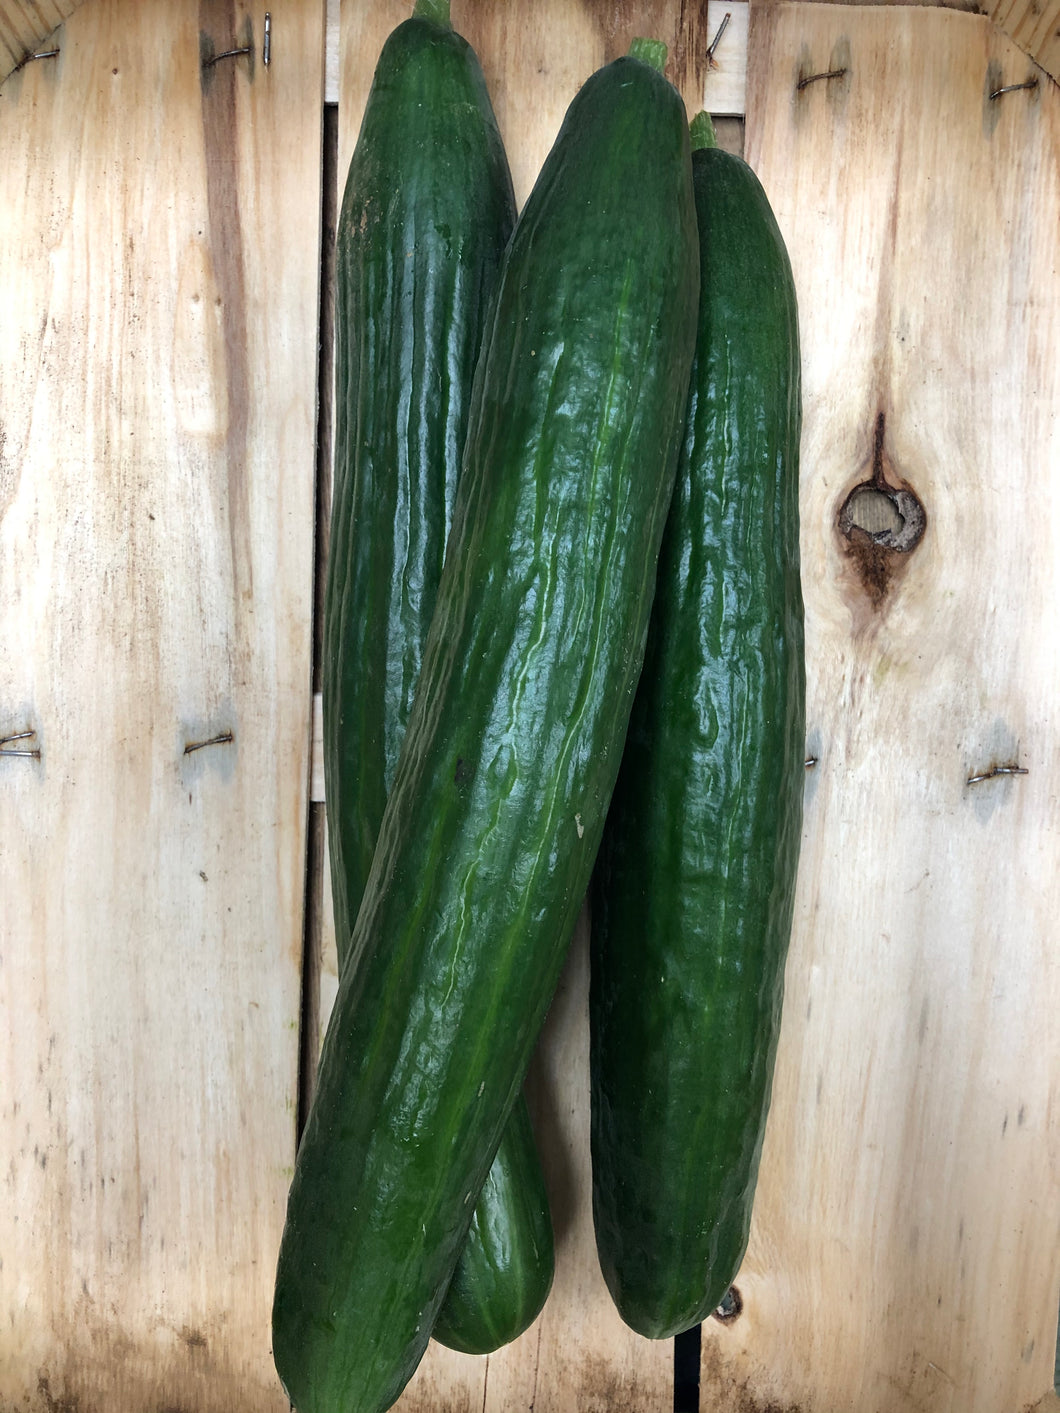 Organic Cucumbers -2.50 each.